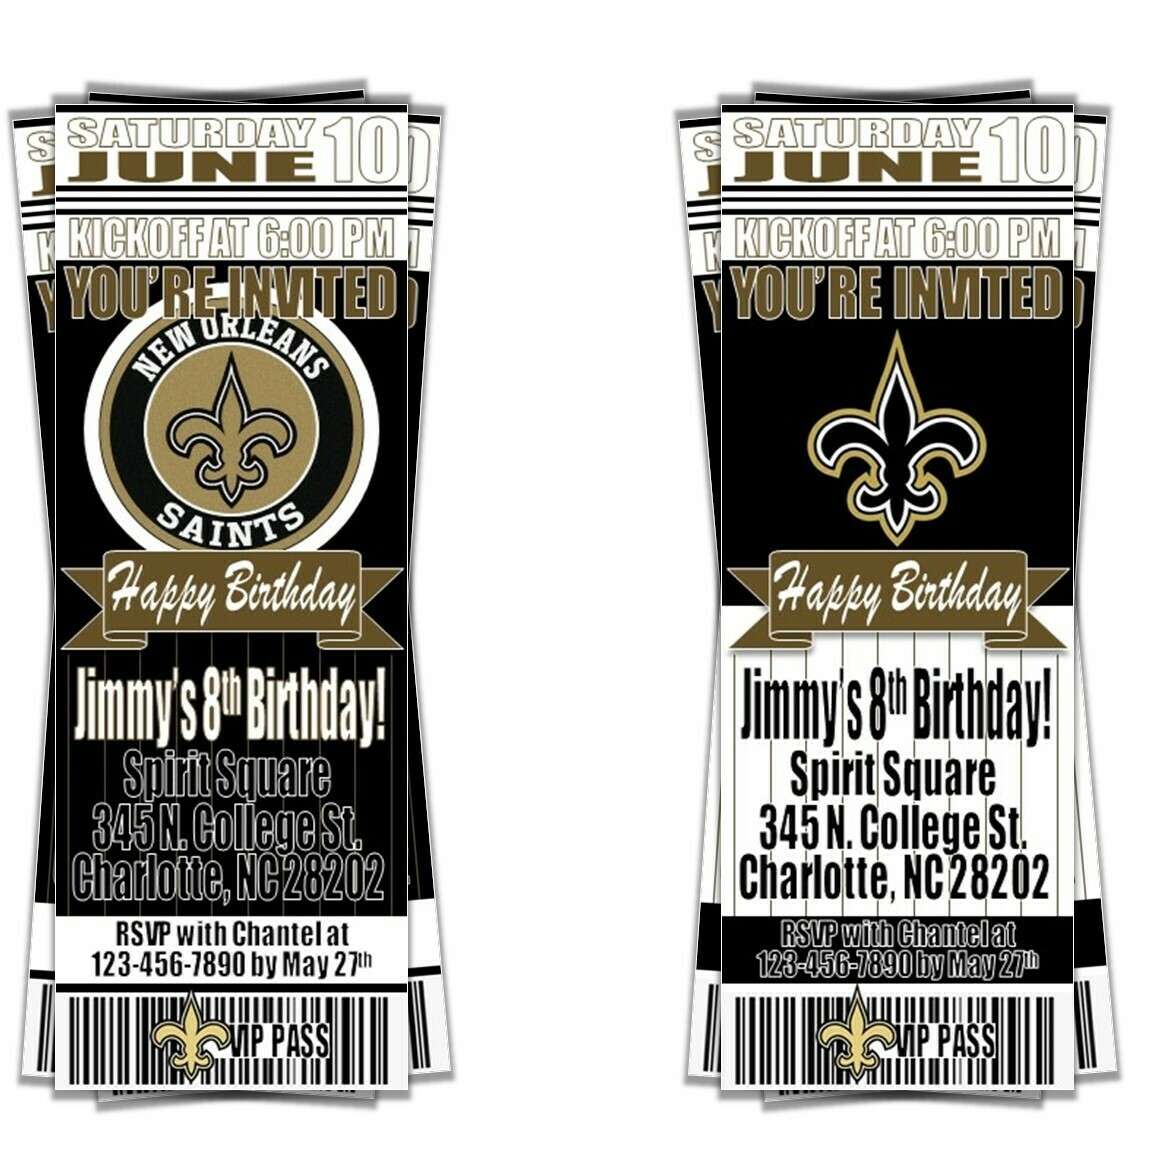 New Orleans Saints NFL Footballl Birthday Invitation Ticket Style